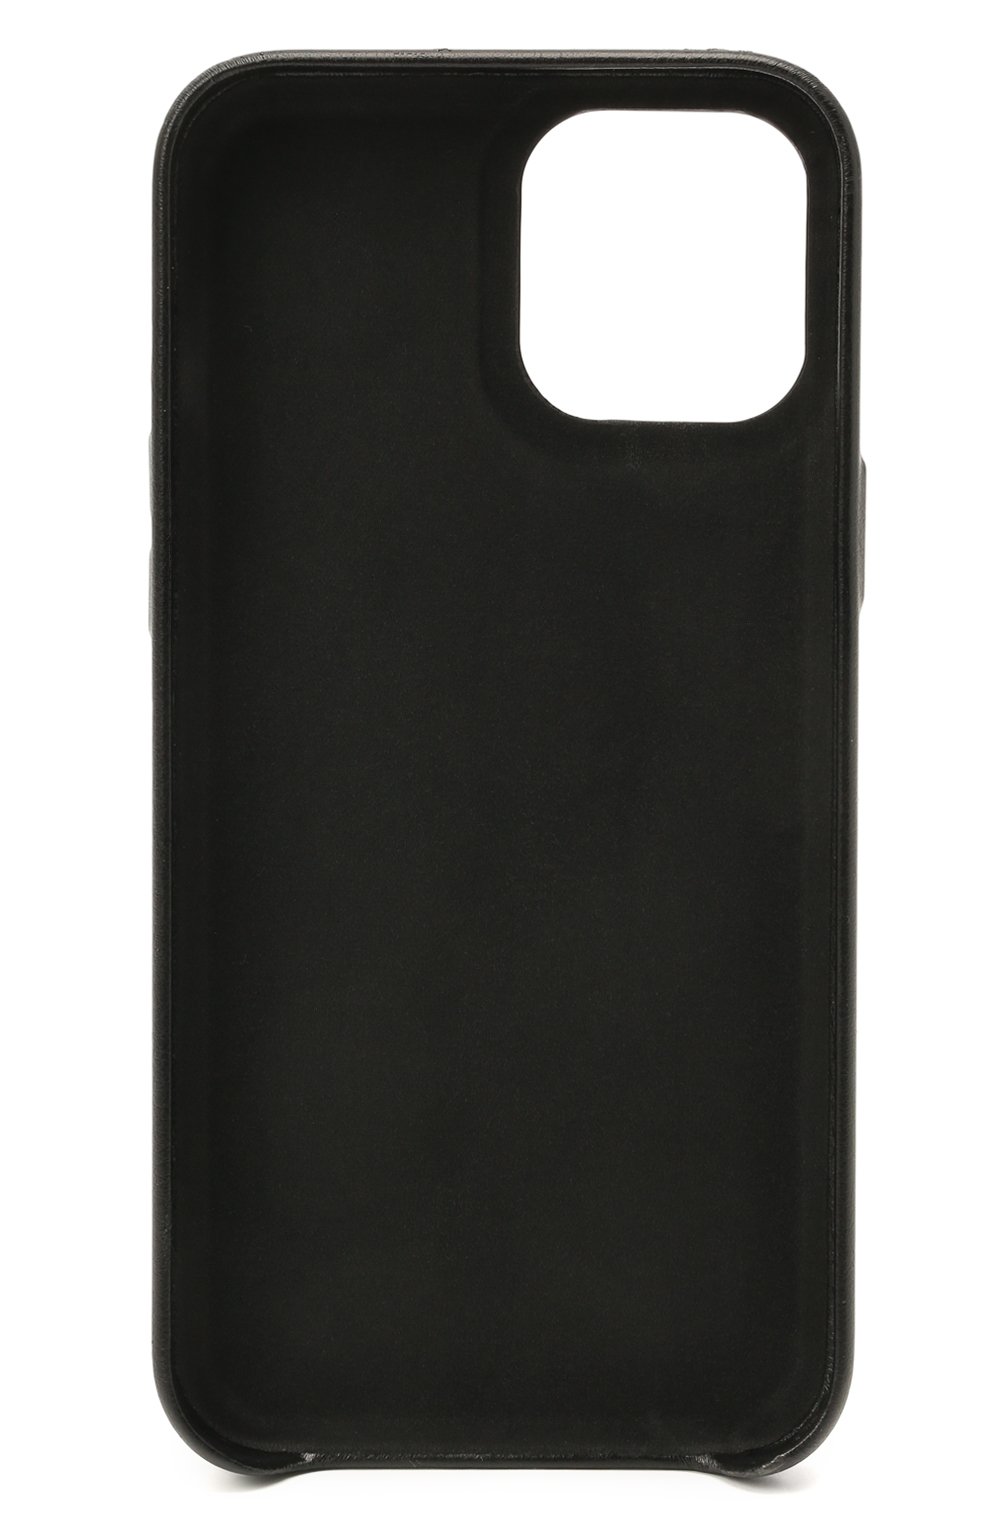 Чехол для iphone 12 pro max VETEMENTS черного цвета, арт. UE51SA370B 2471/W/BLACK NEXT PR0 MAX | Фото 2 (Материал: Пластик)